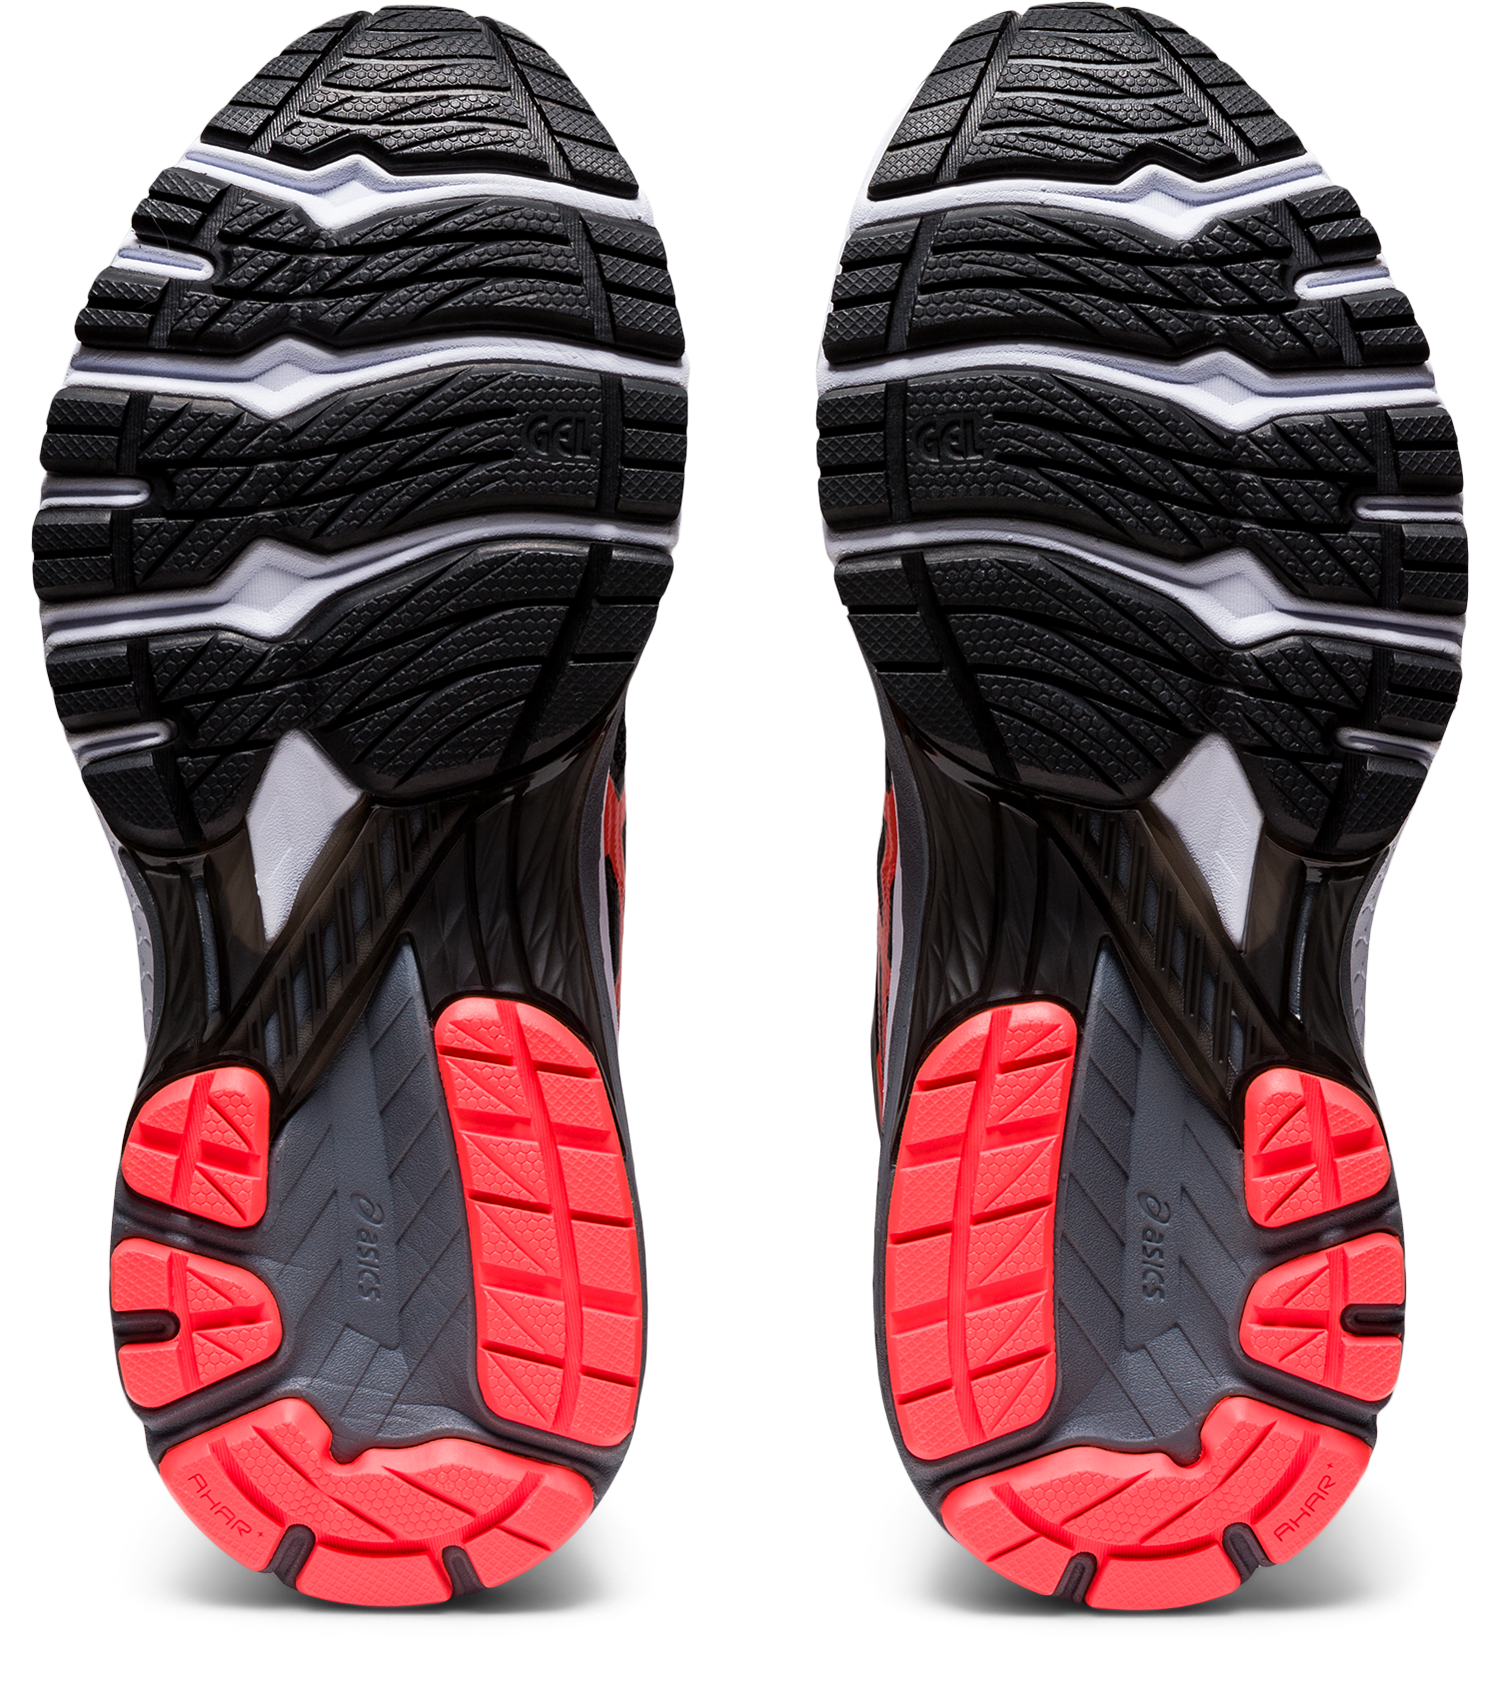 Asics Women's GT-2000 8 (D) Wide Running Shoes in Black/Sunrise Red